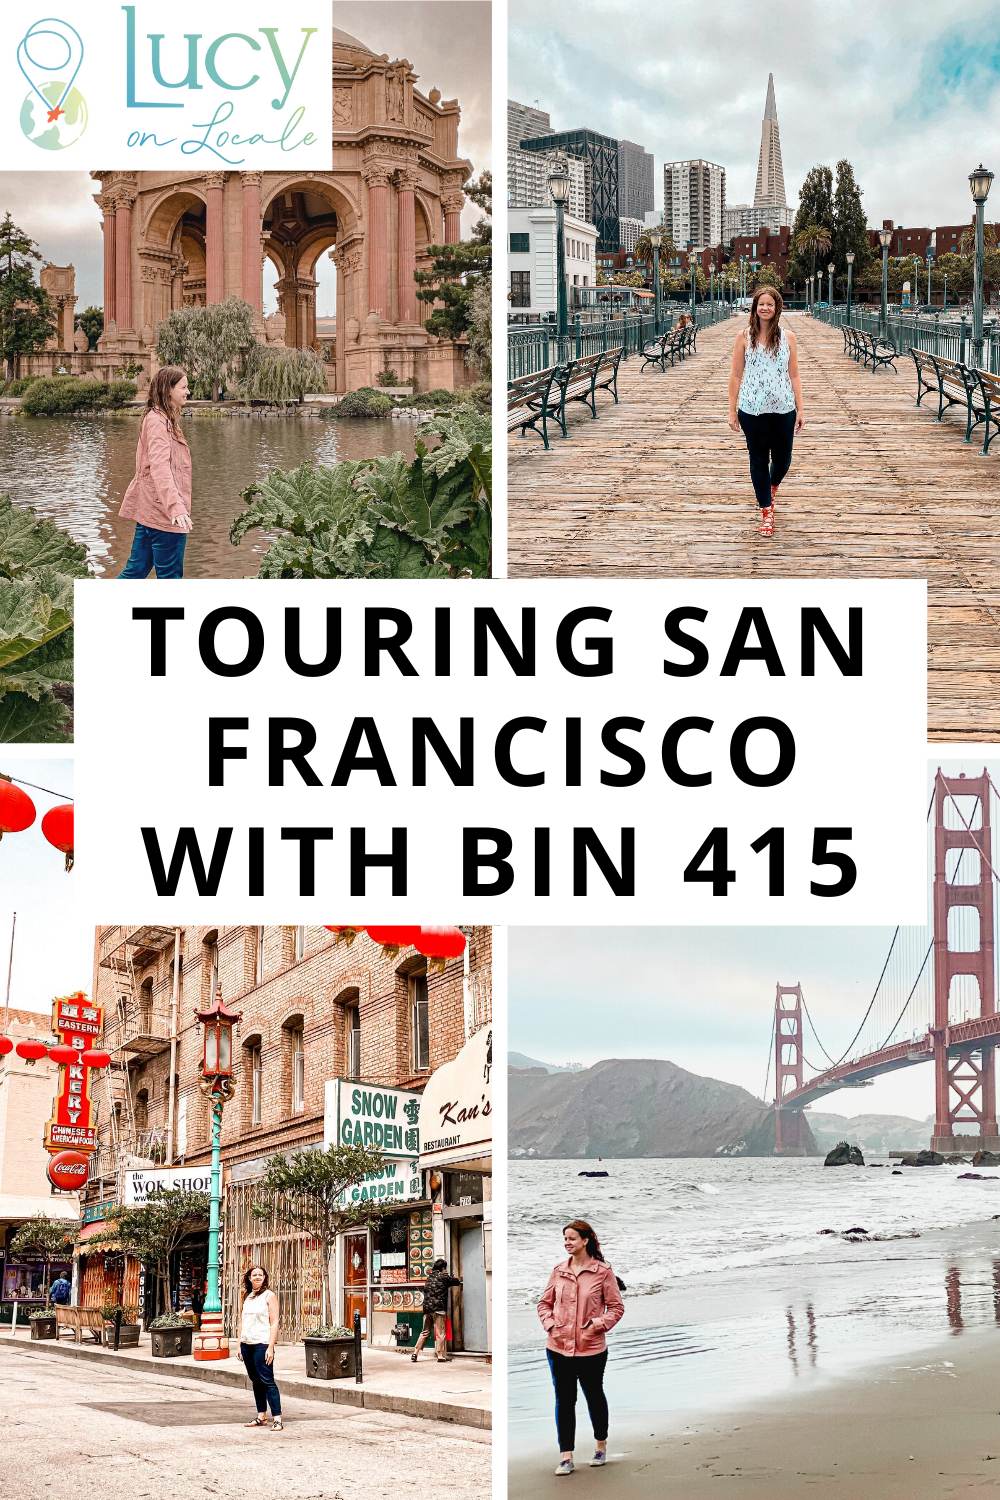 Bin 415 Private Tours of San Francisco